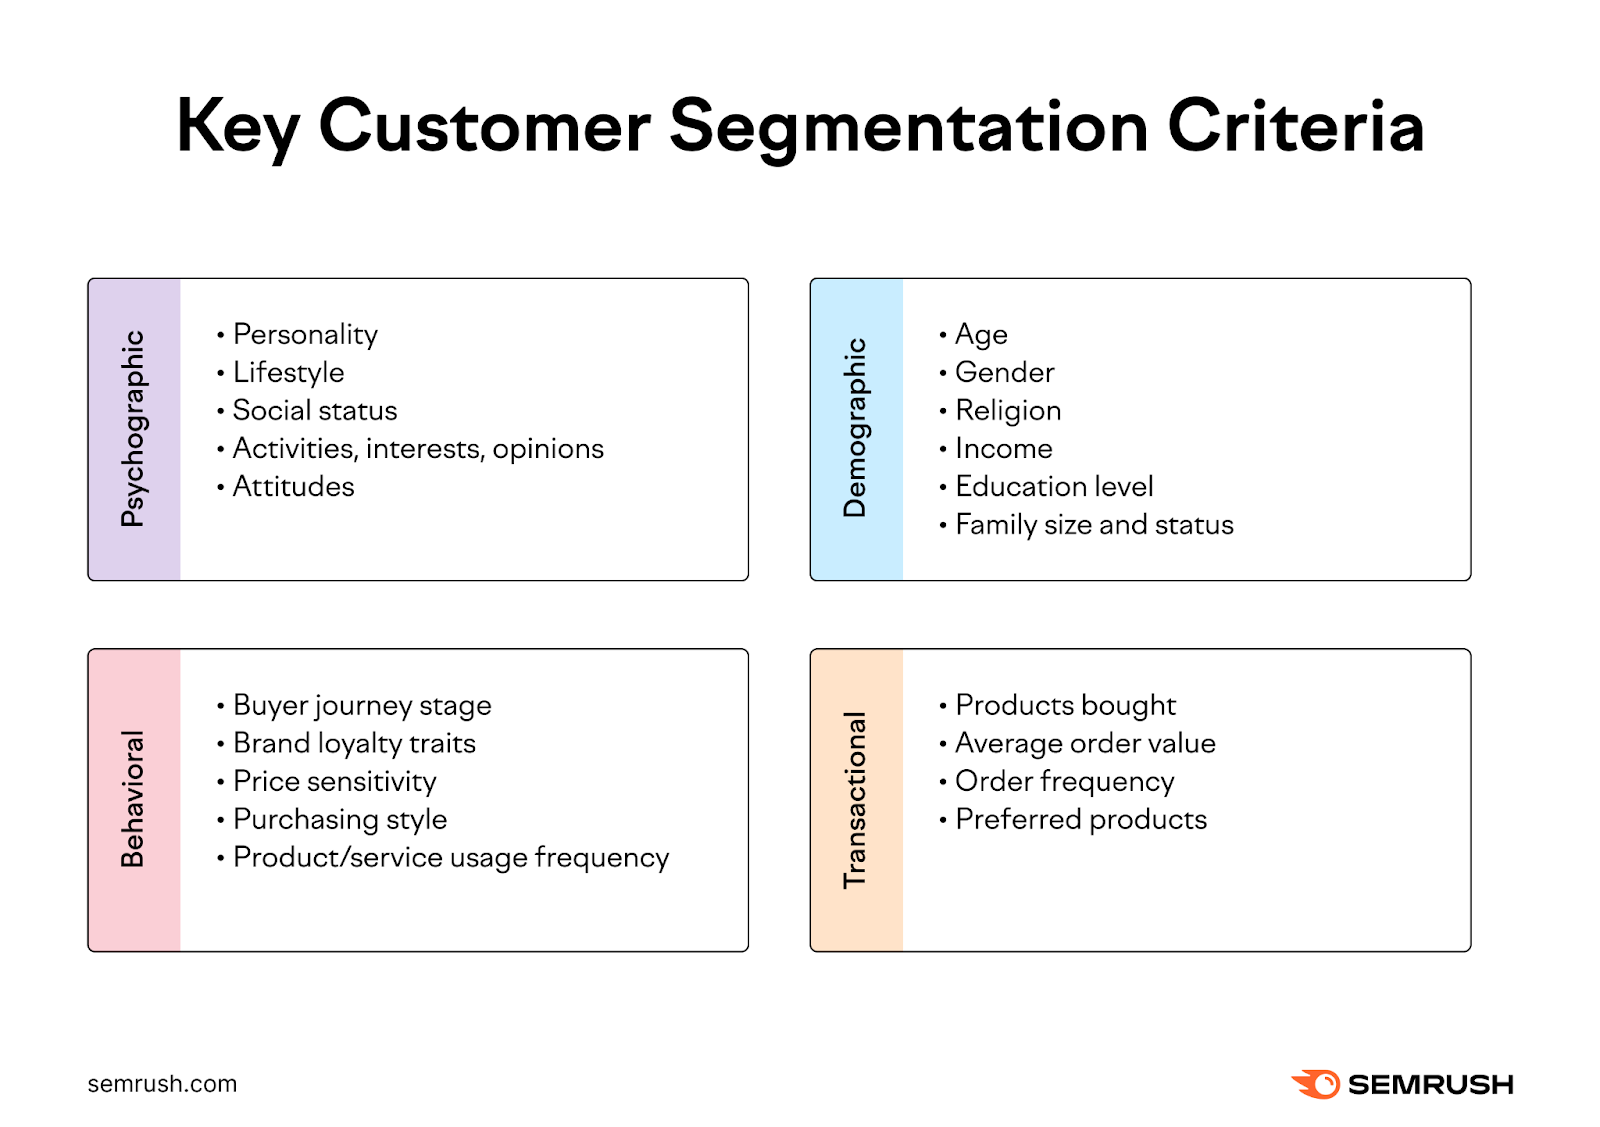 Key customer segmentation criteria, broke down in four groups: psychographic, behavioral, demographic, and transactional